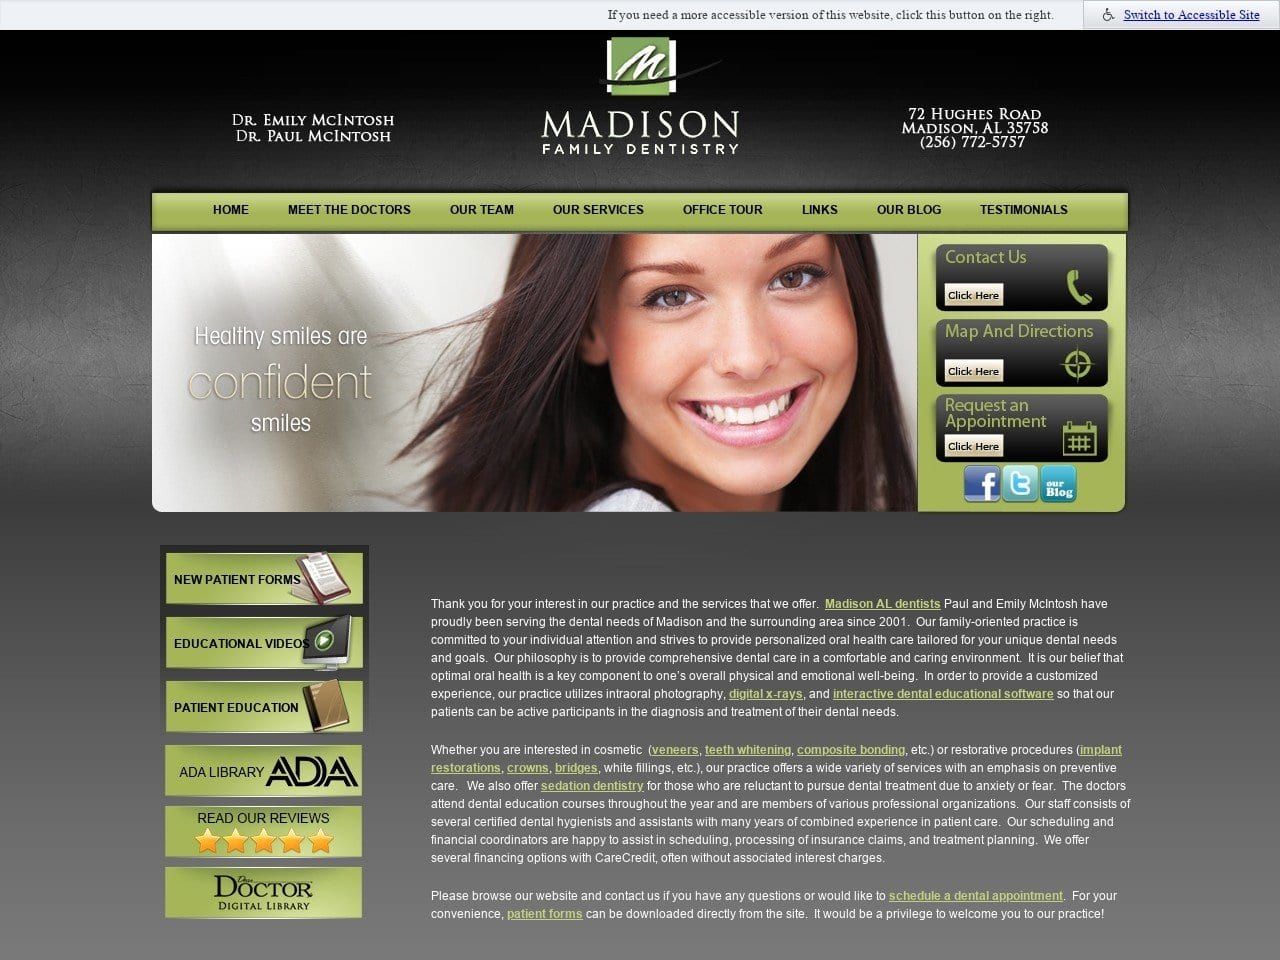 Madison Family Dentistry Website Screenshot from madisonsmilecare.com